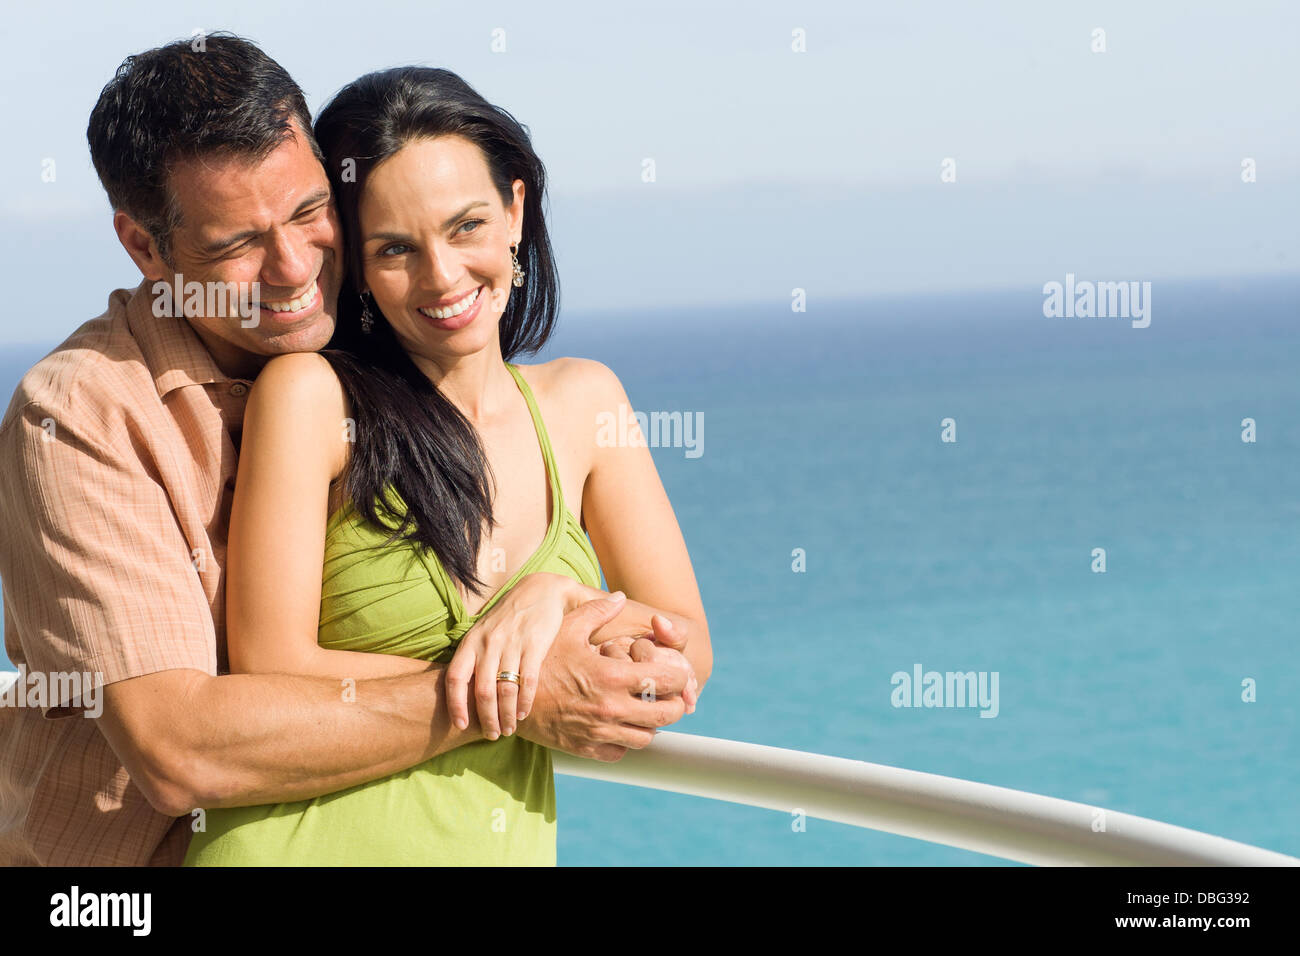 Hispanic couple hugging on boat deck Stock Photo